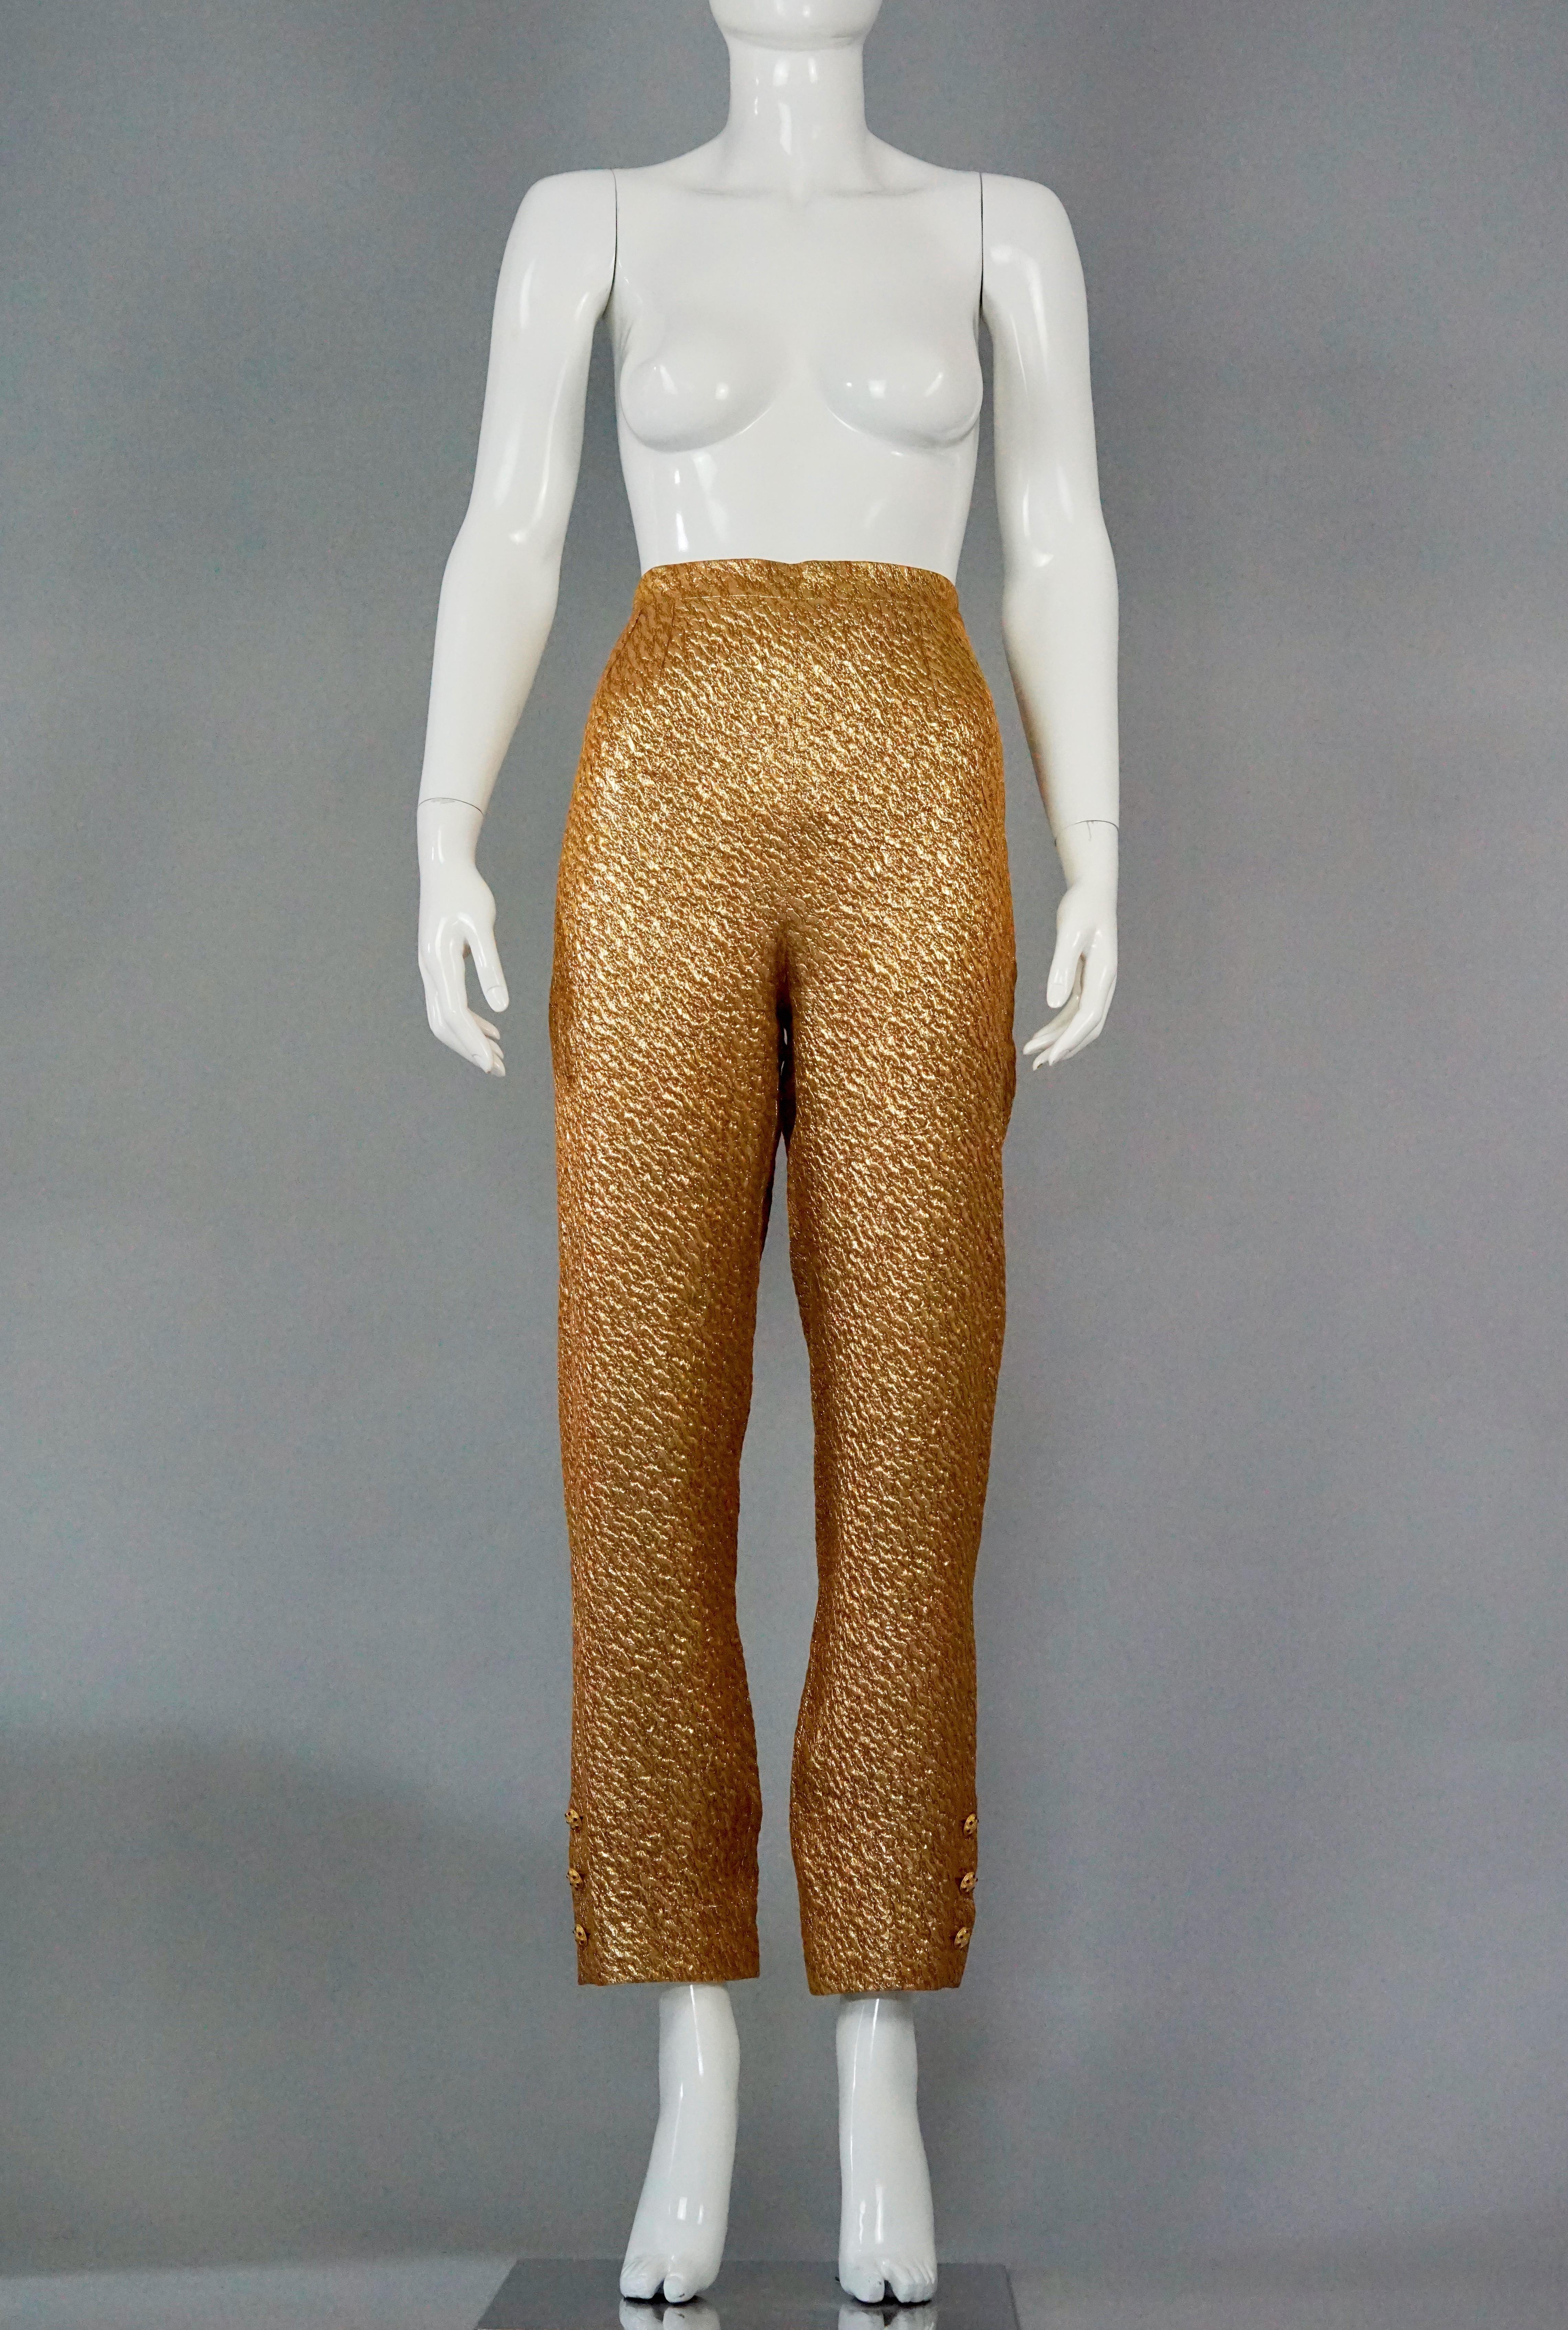 Vintage 1996 CHANEL Gold Brocade Silk Lurex with Gripoix Buttons Trouser Pants

Measurements taken laid flat, please double waist and hips:
Waist: 14.17 inches (36 cm)
Hips: 19.68 inches (50 cm)
Length: 40.15 inches (102 cm)

From 1996 Autumn